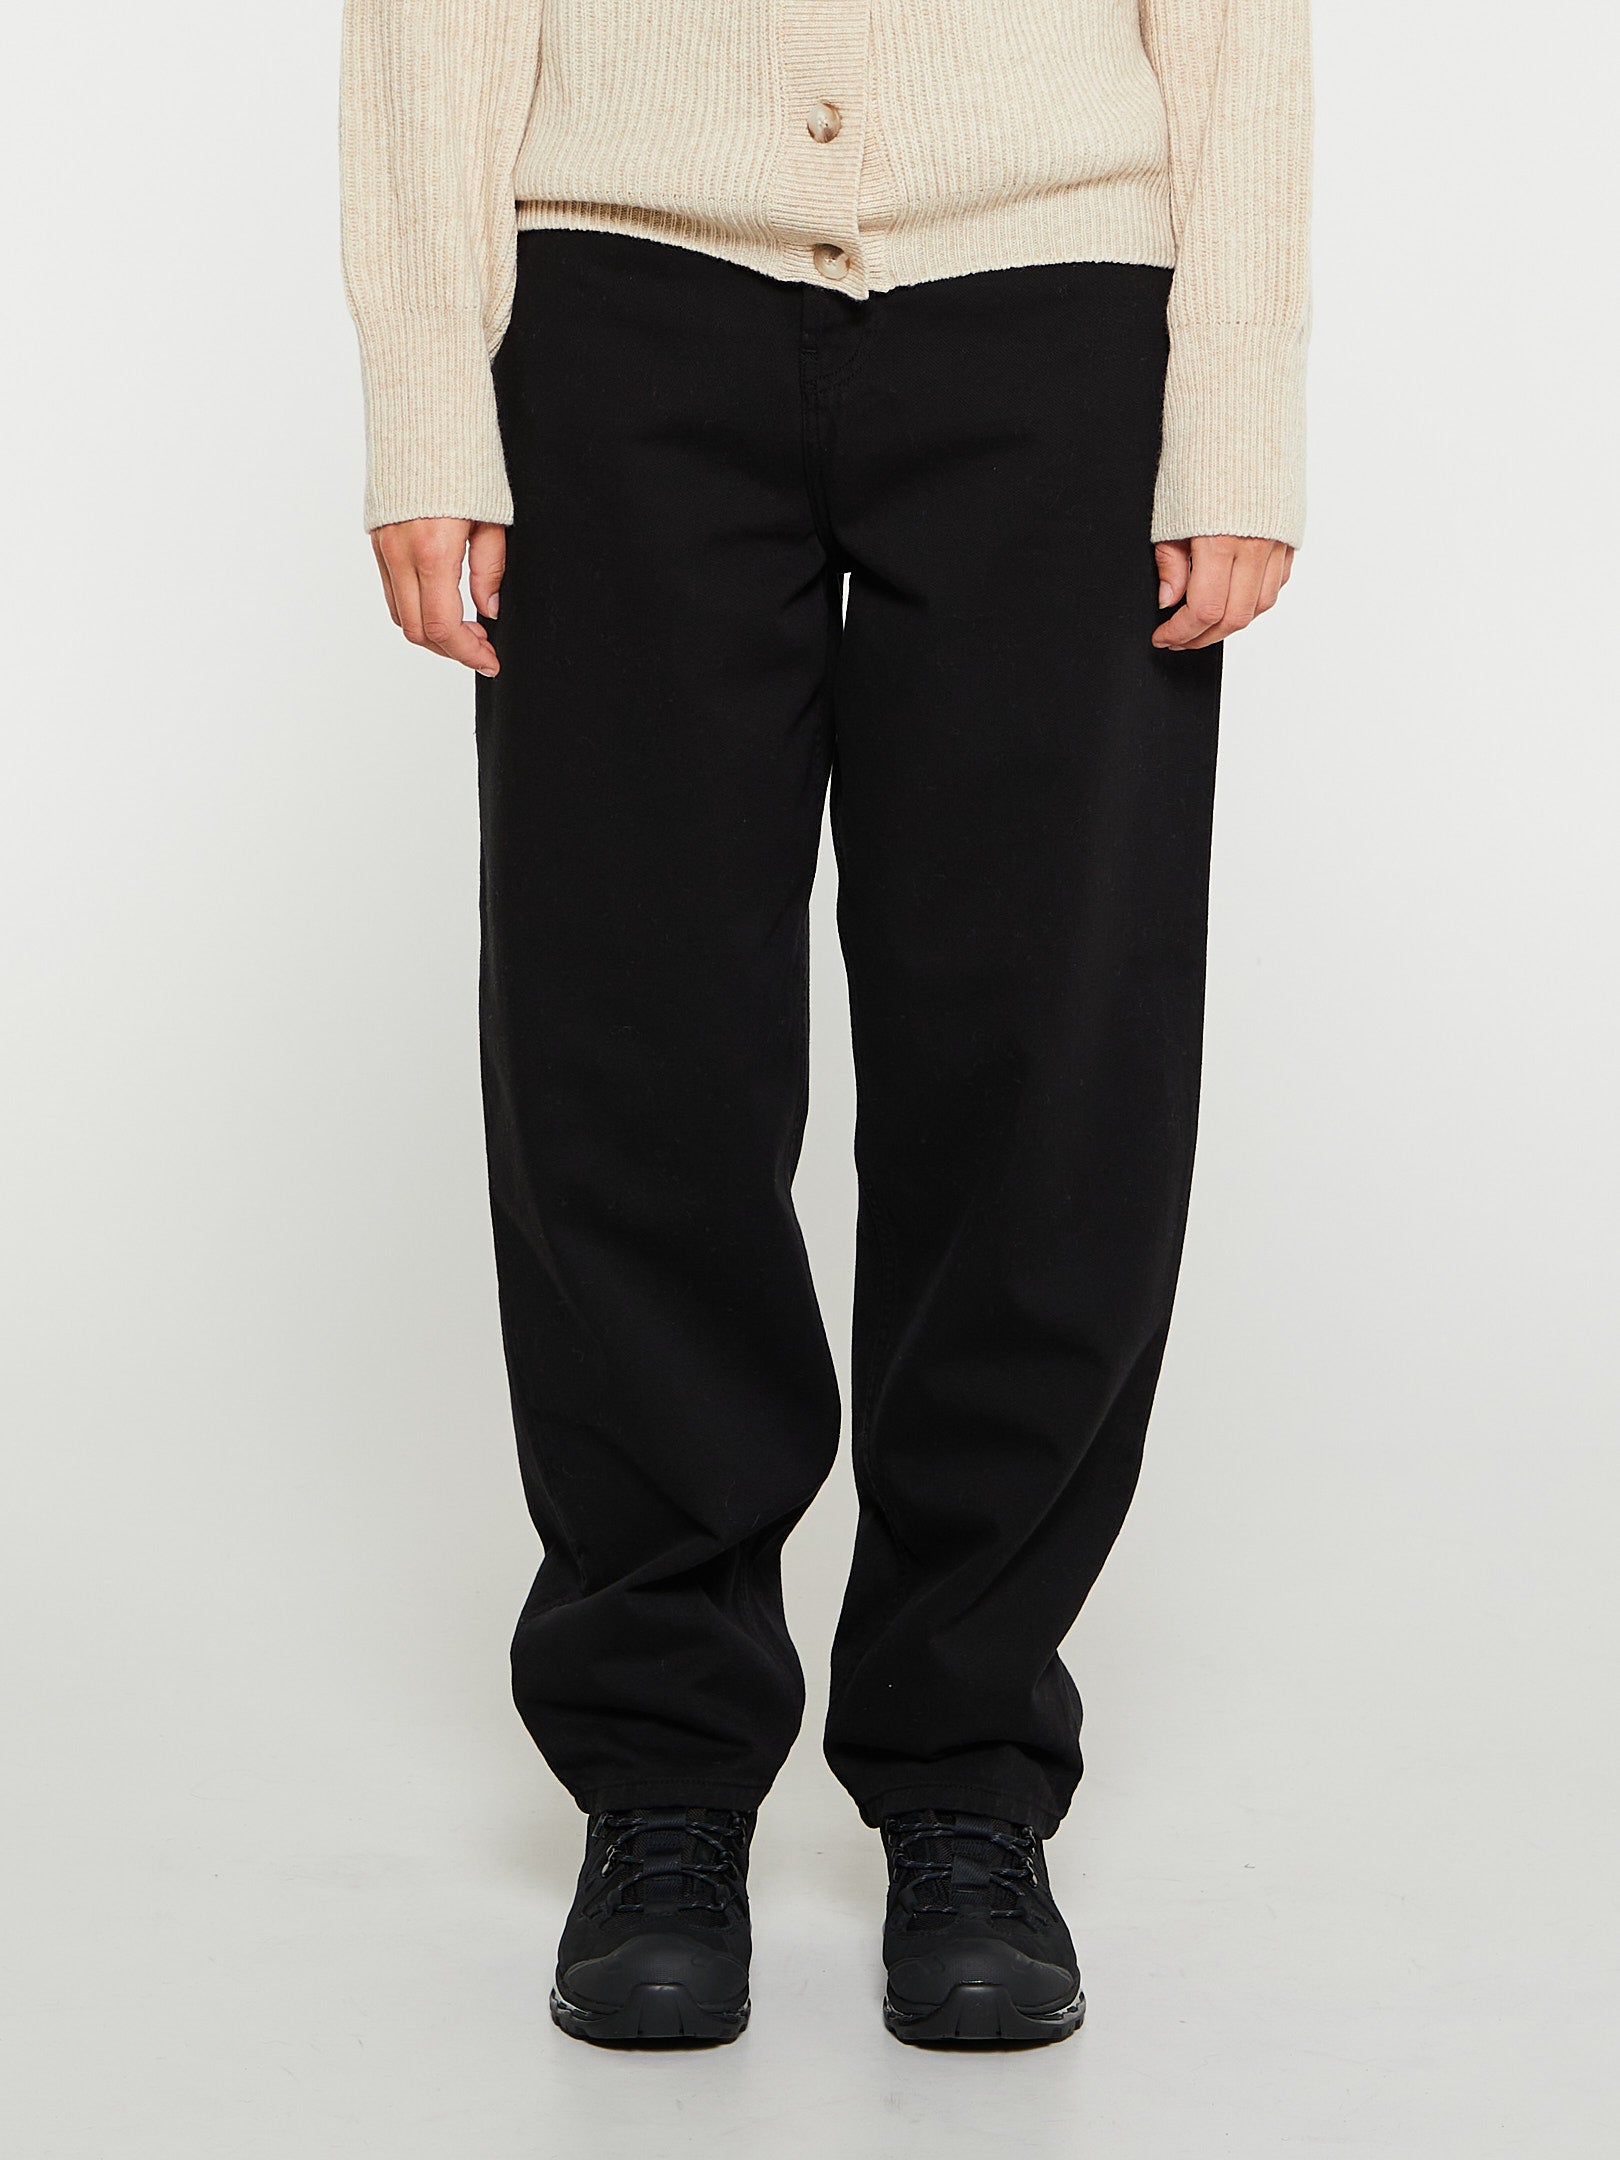 Carhartt WIP W' Derby Bukser i Black garment dyed stoy